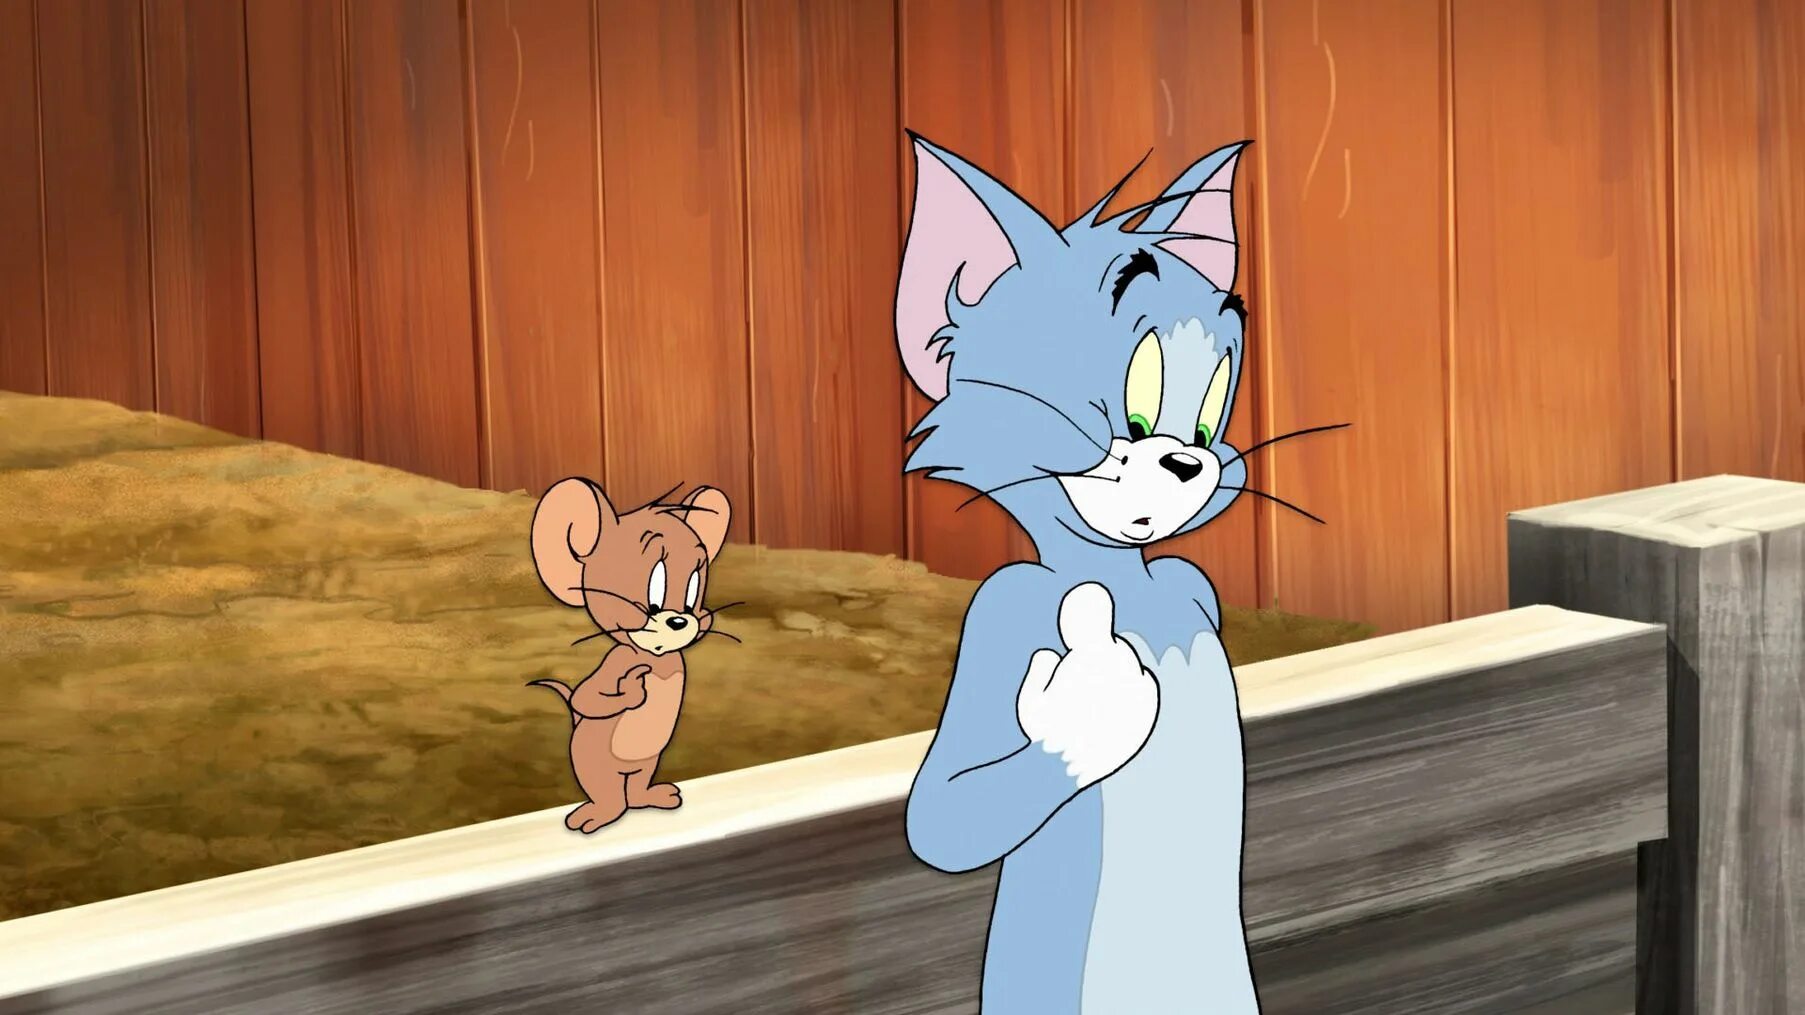 Tom jerry 2. Tom and Jerry. Том и Джерри 1960. Том и Джерри Tom and Jerry.